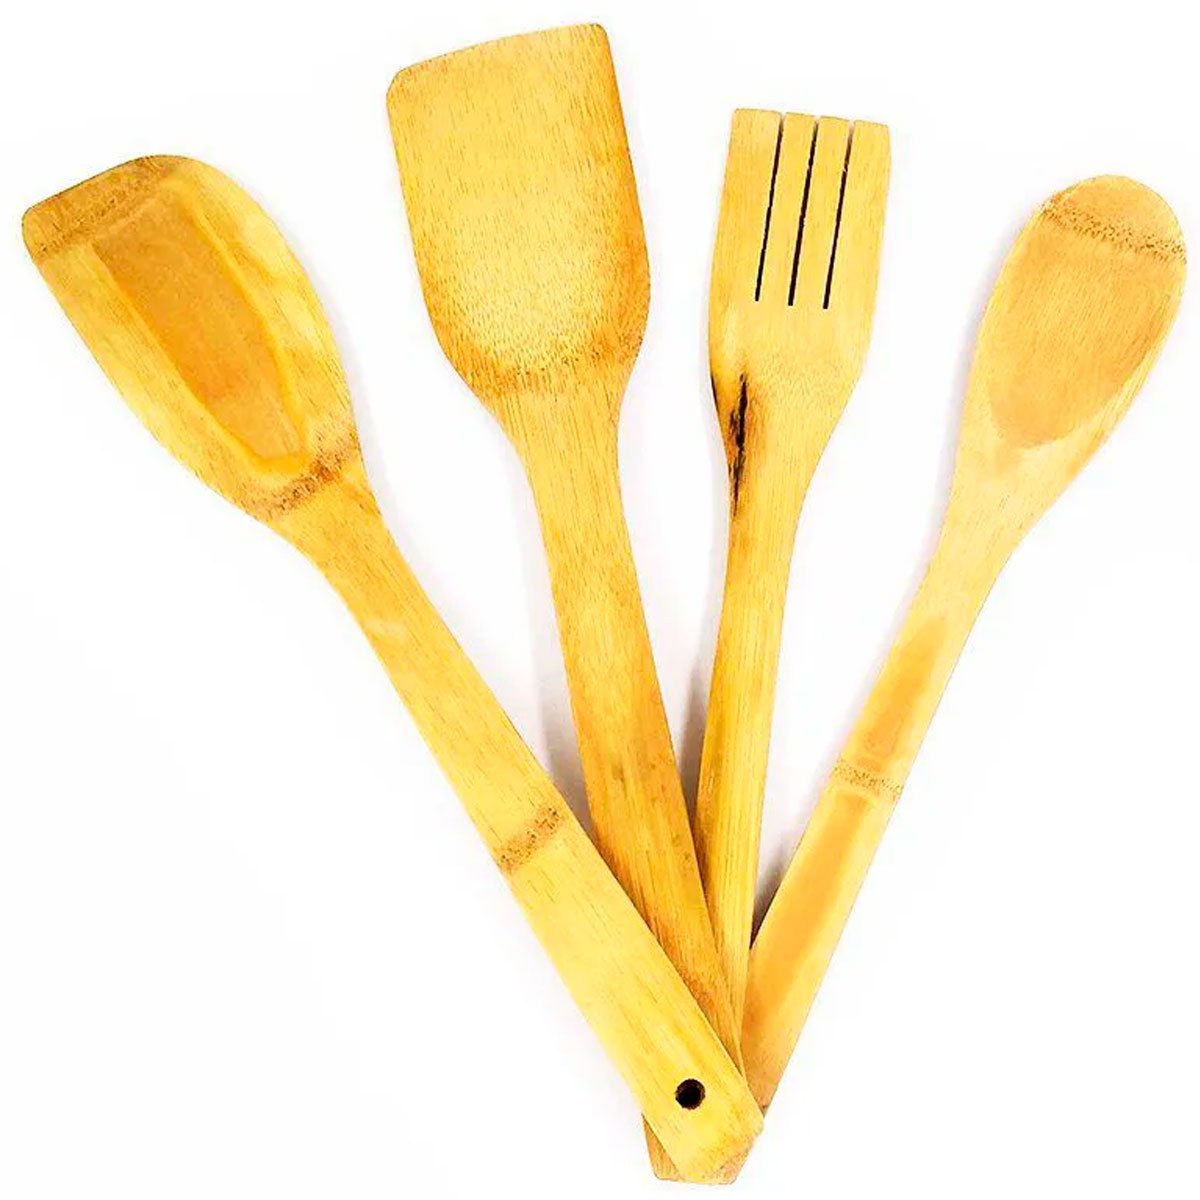 03 conjunto kit 5 utensilios de madeira bambu ecologico